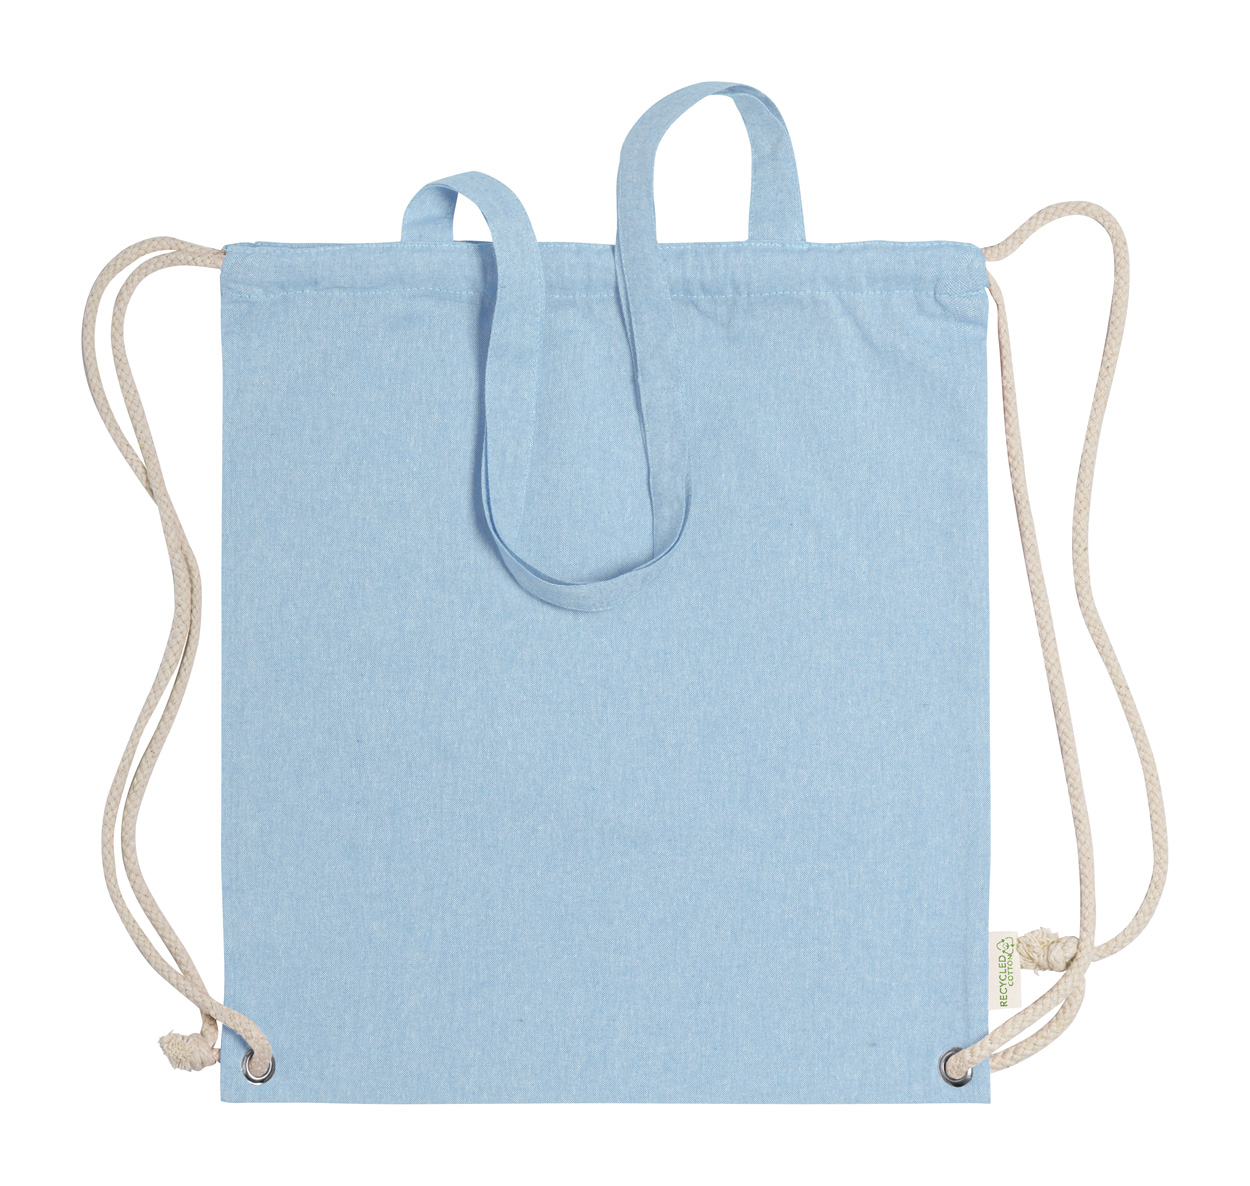 Fenin drawstring bag - baby blue